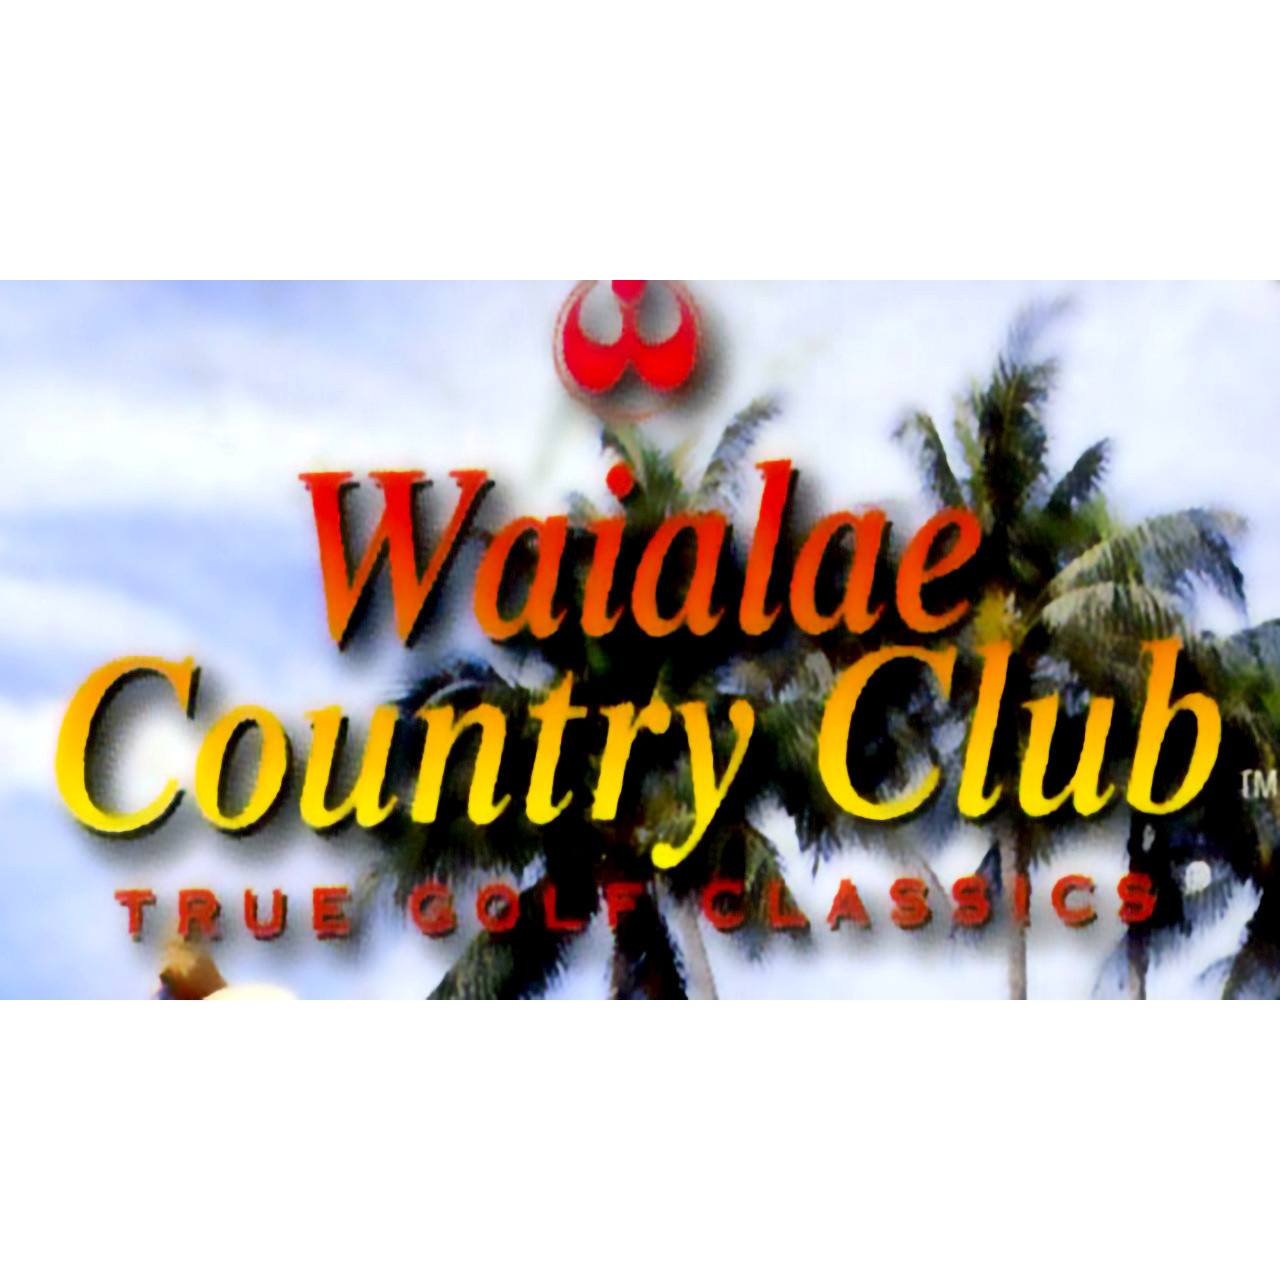 Waialae Country Club: True Golf Classics Nintendo 64 N64 Game